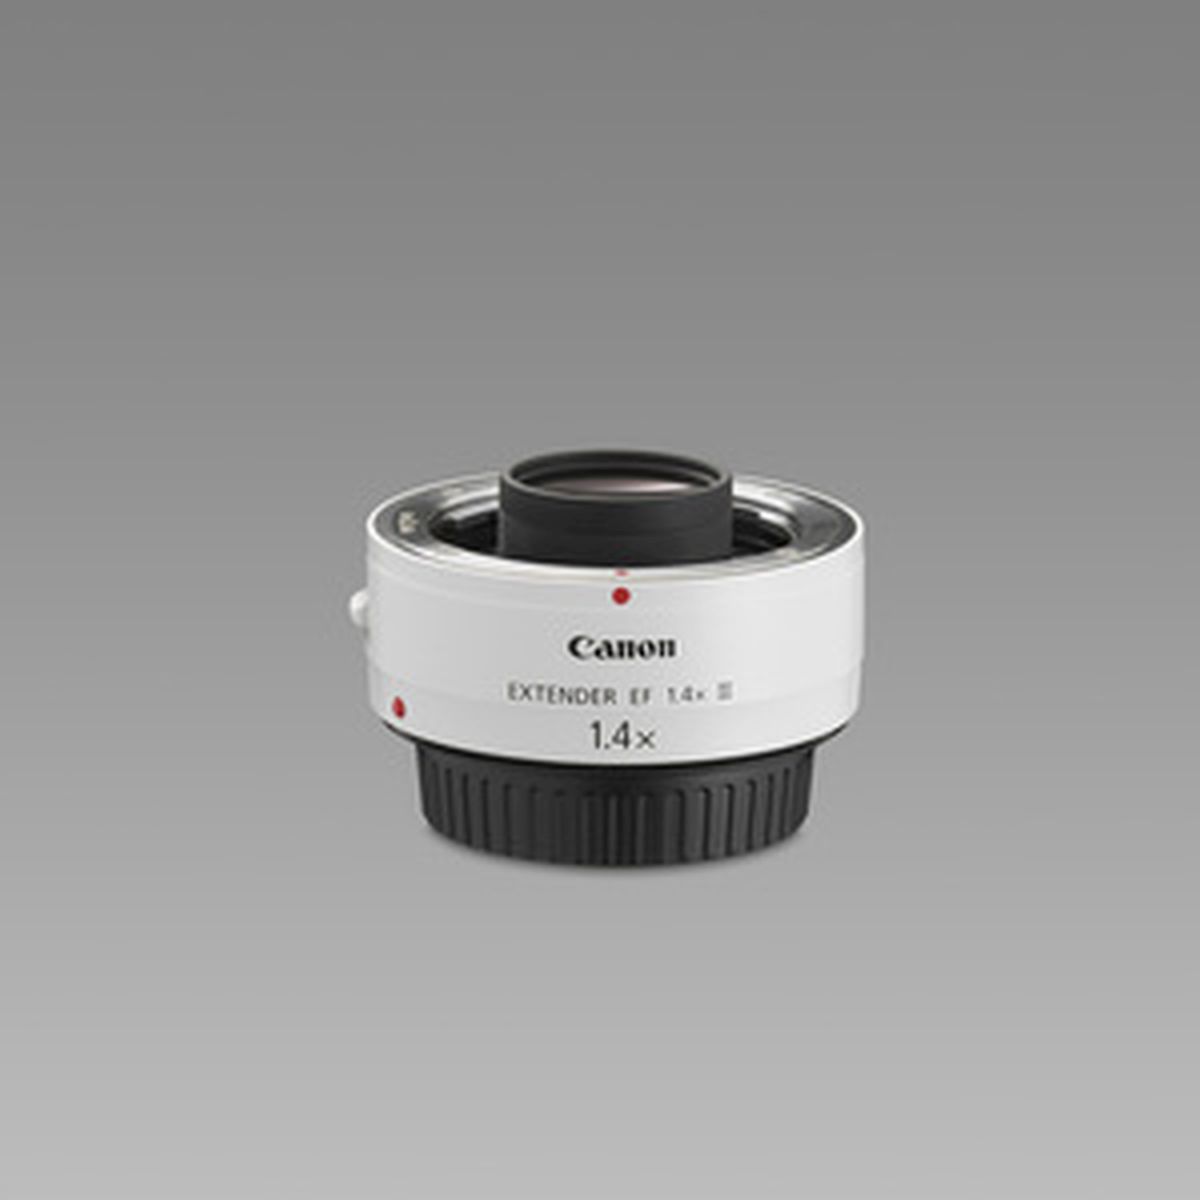 Canon Extender EF 1,4x III